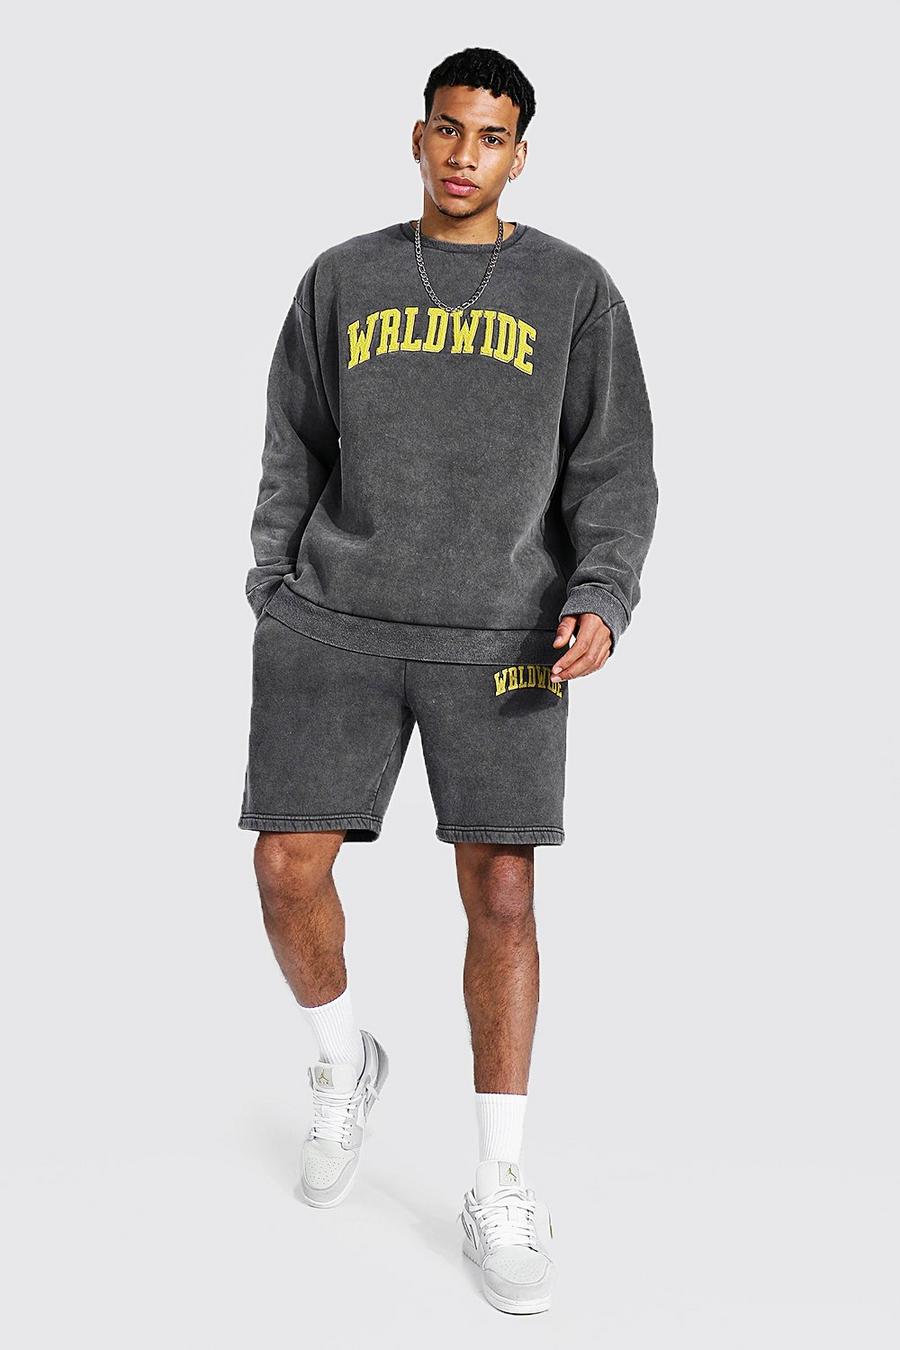 Oversize überfärbter Wrldwide kurzer Trainingsanzug, Charcoal image number 1